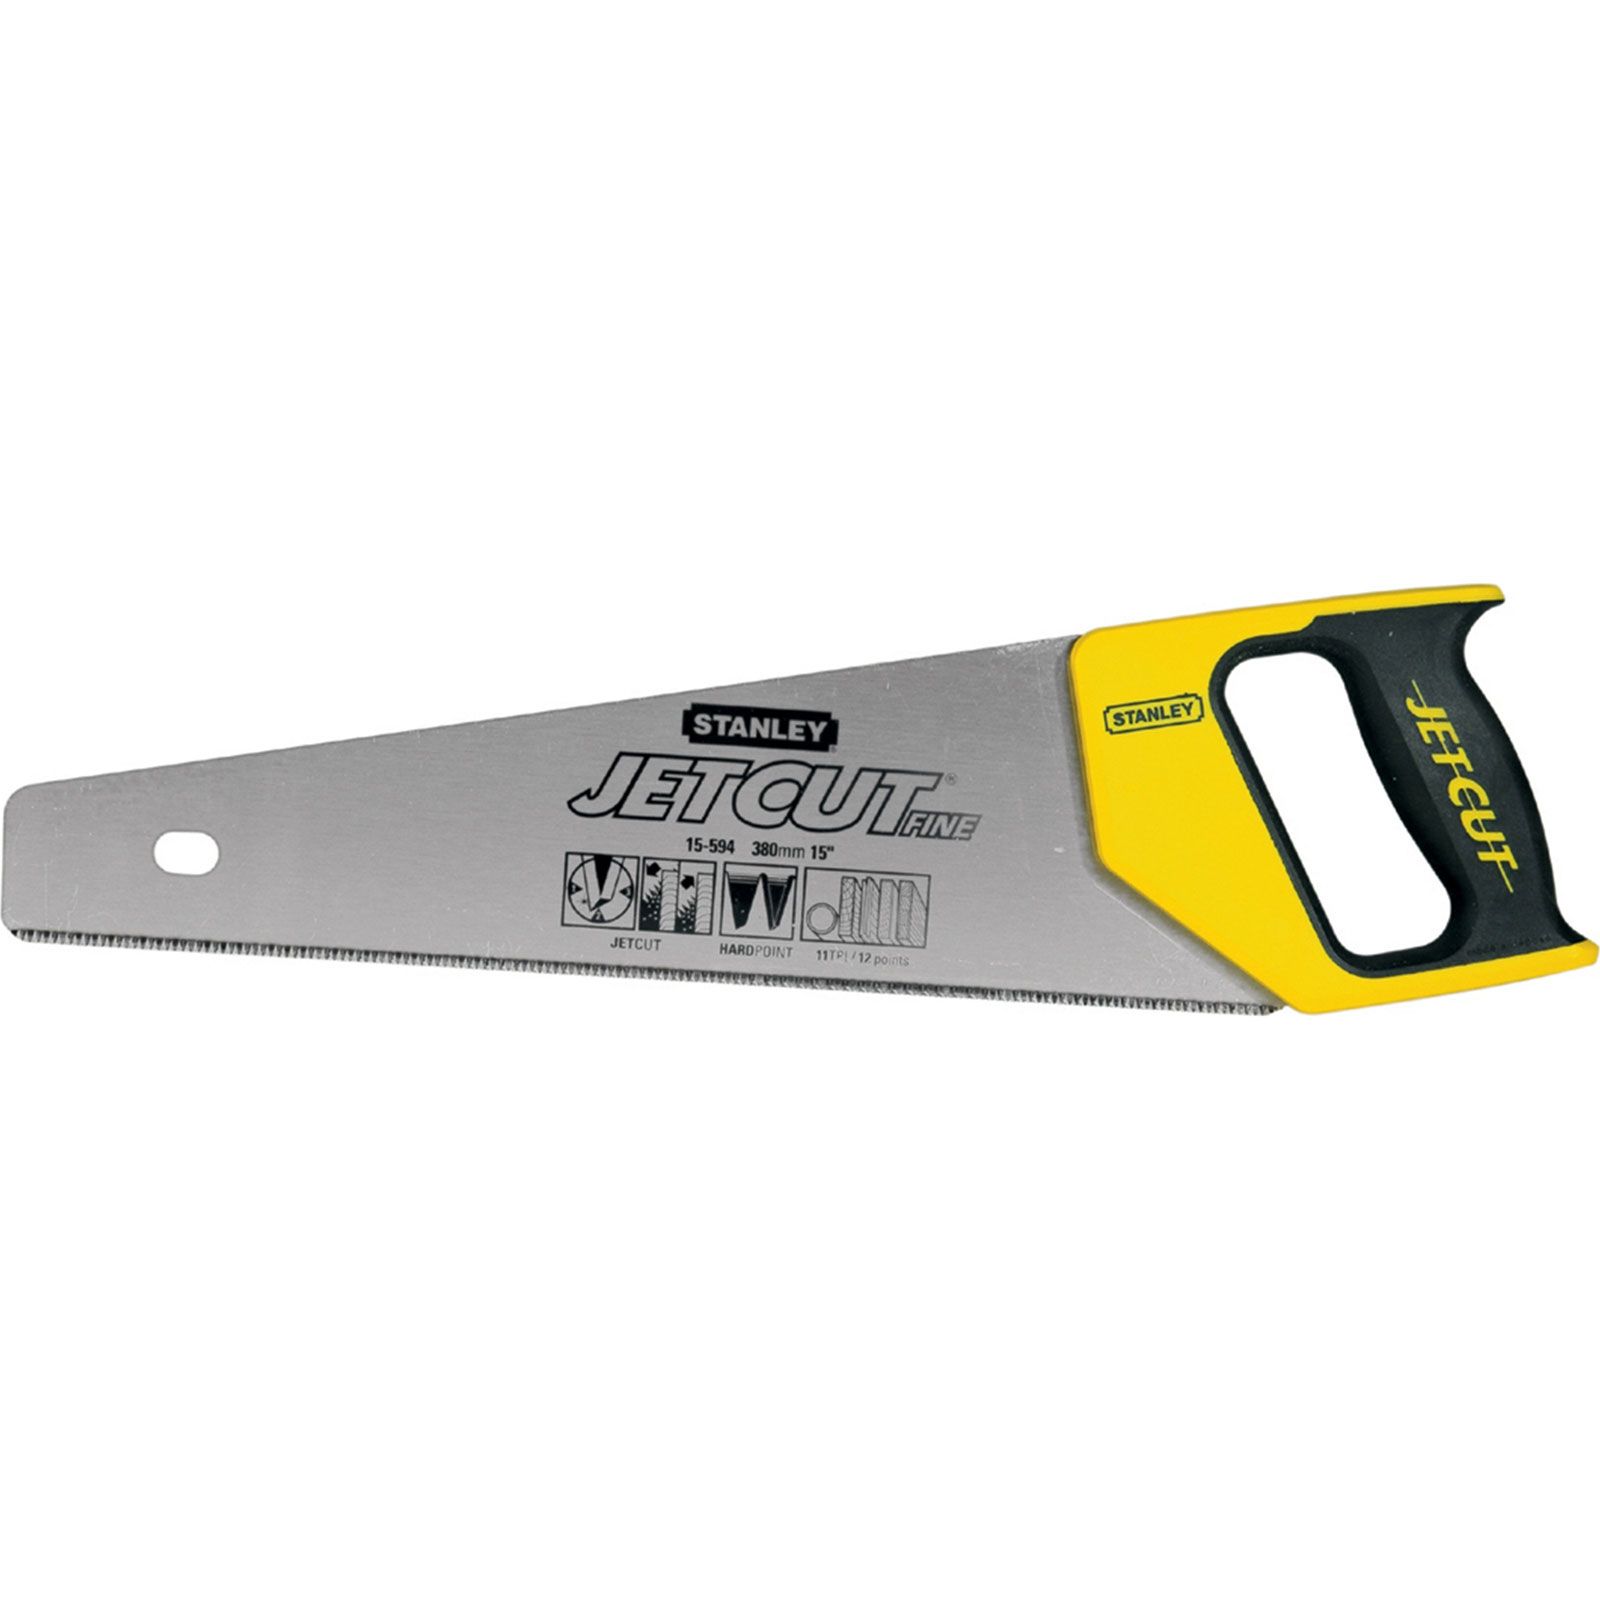 Ножовка по дереву Stanley jet cut fine 380мм 2-15-594 Stanley от магазина Tehnorama